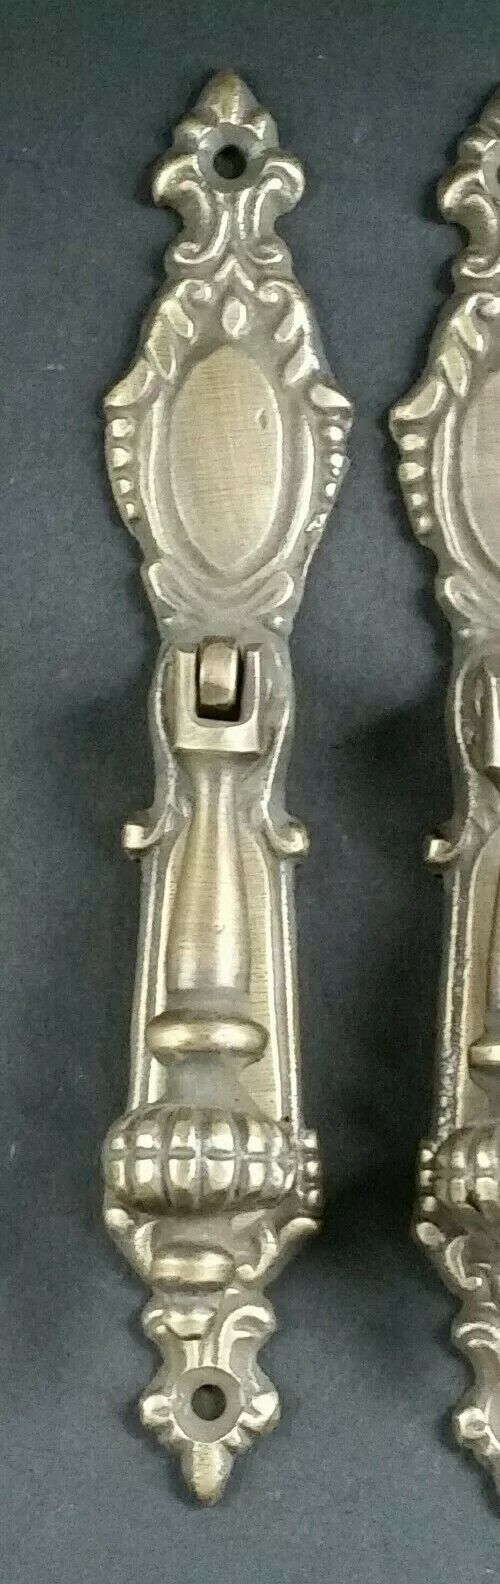 1 x Lg.Ornate Vertical Teardrop Brass Handle Drawer Pulls 5 7/8" #H18